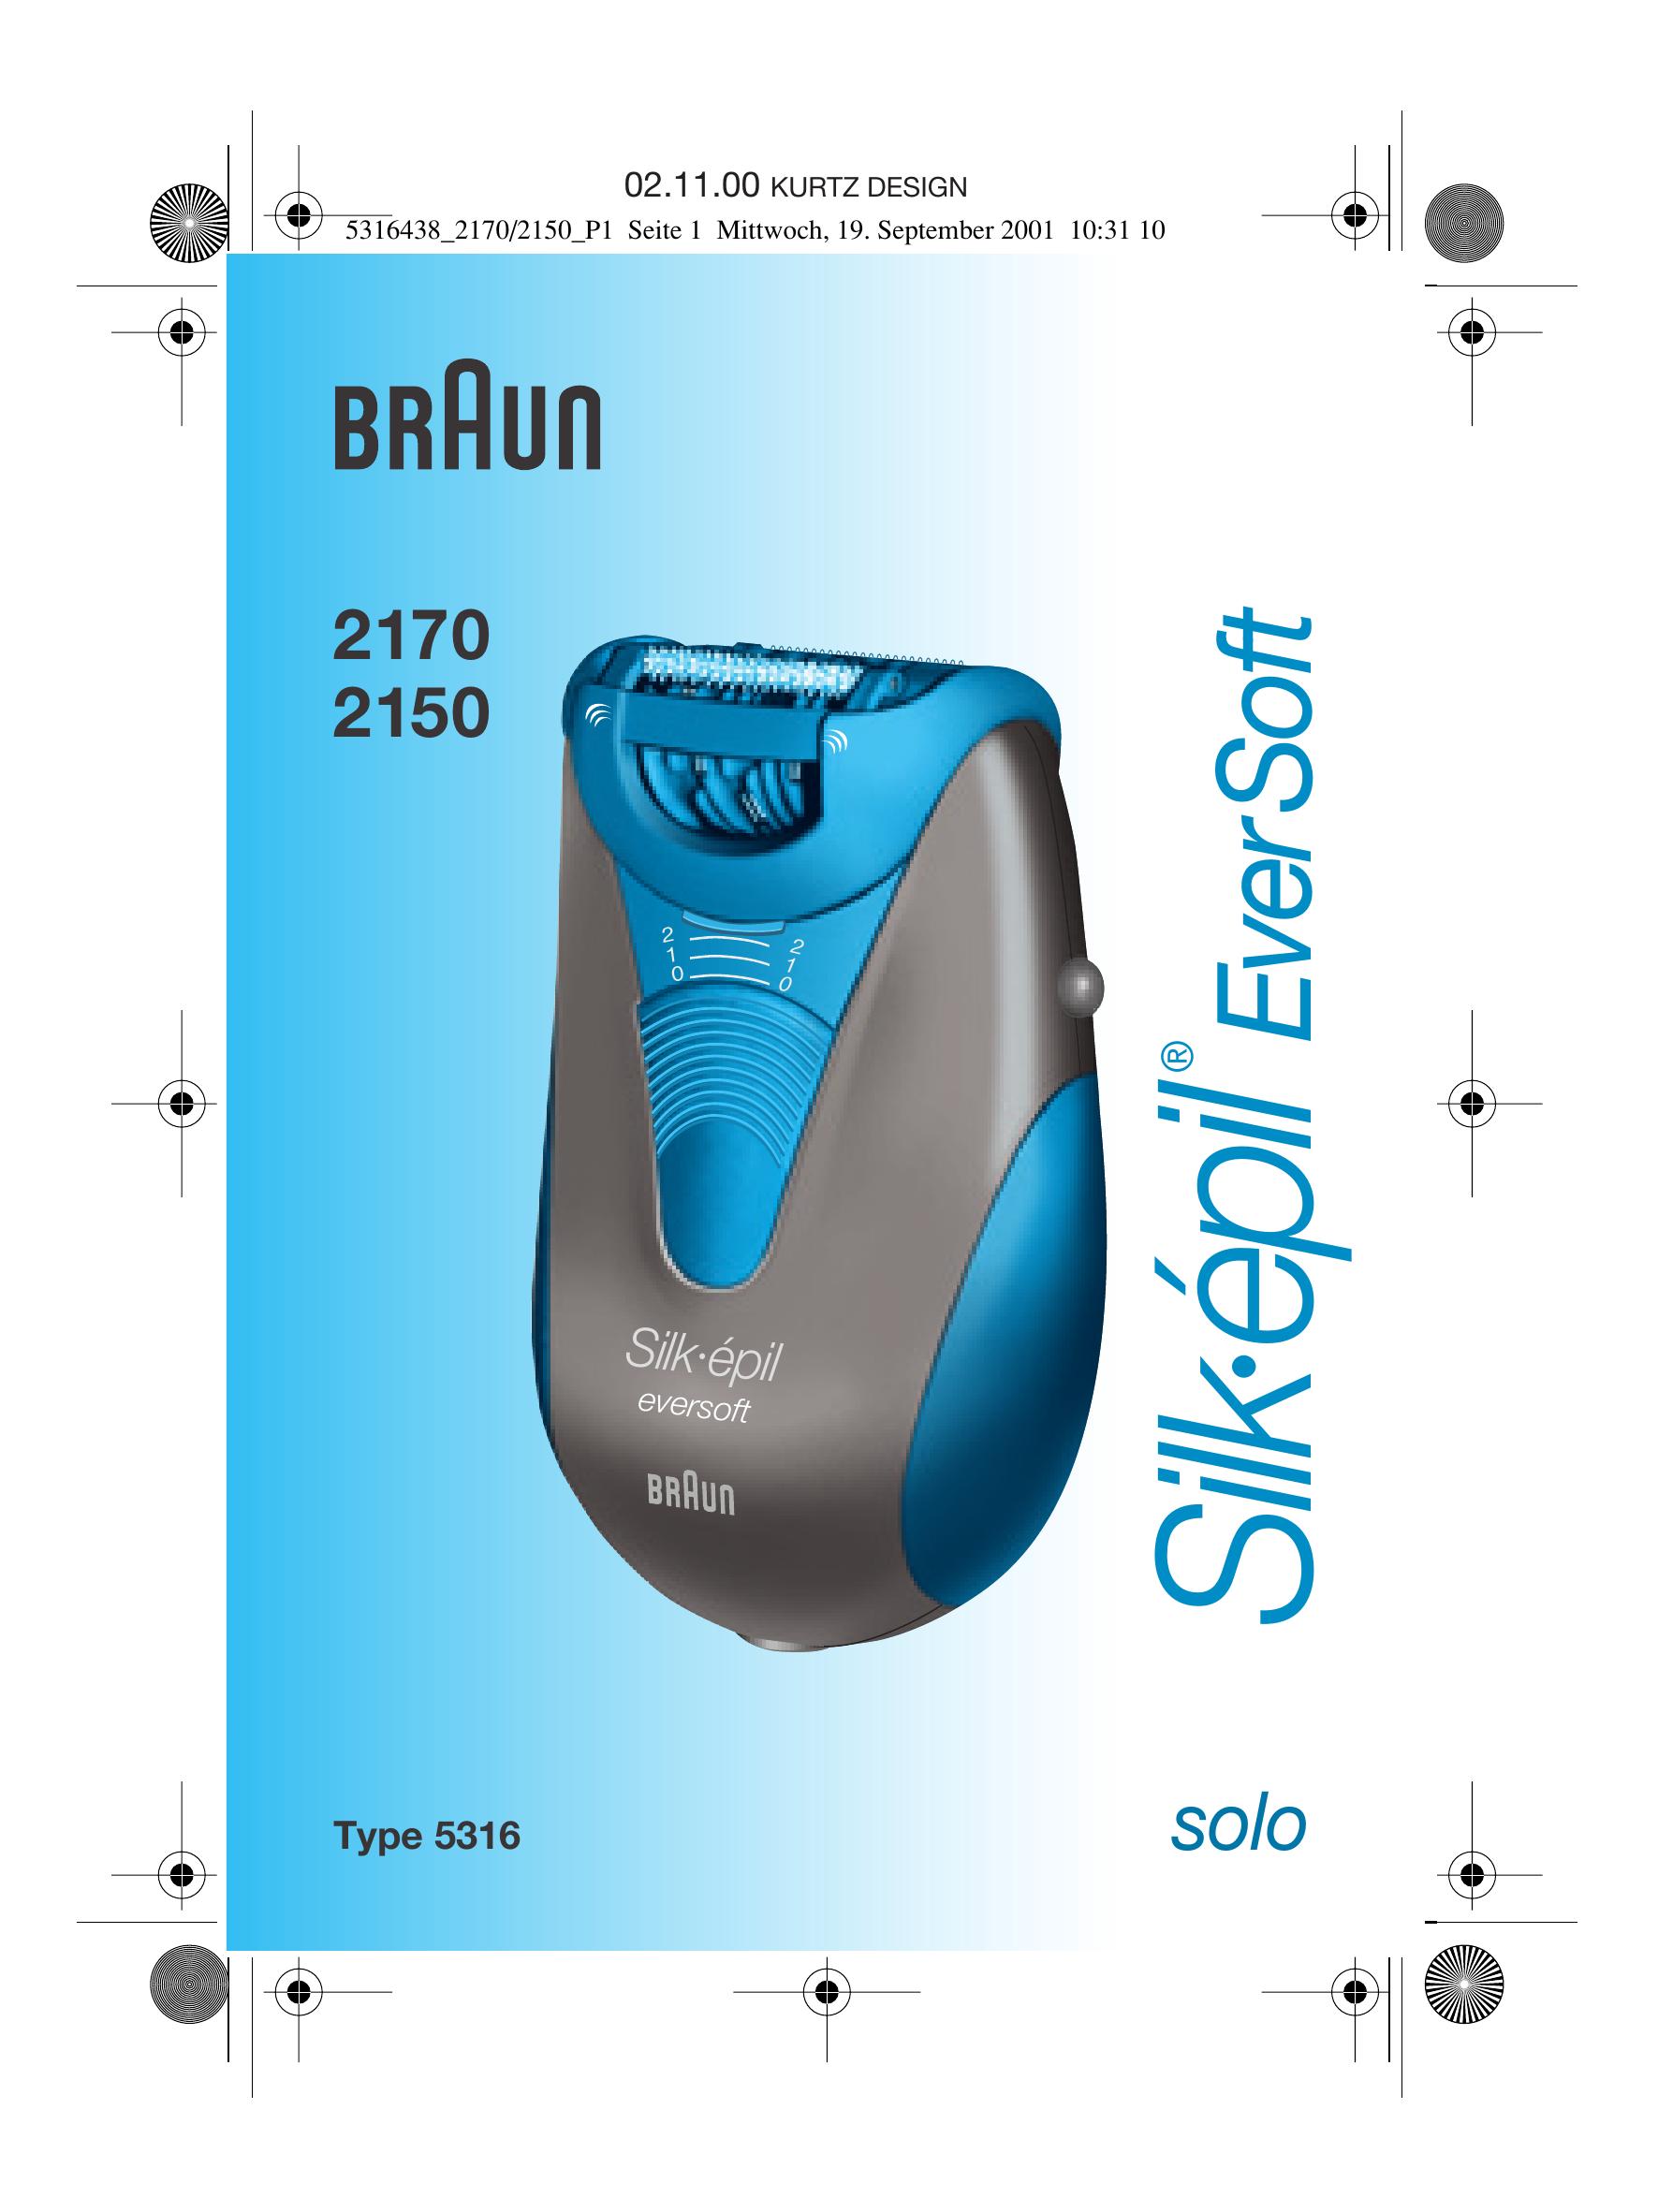 Braun 2170 Electric Shaver User Manual